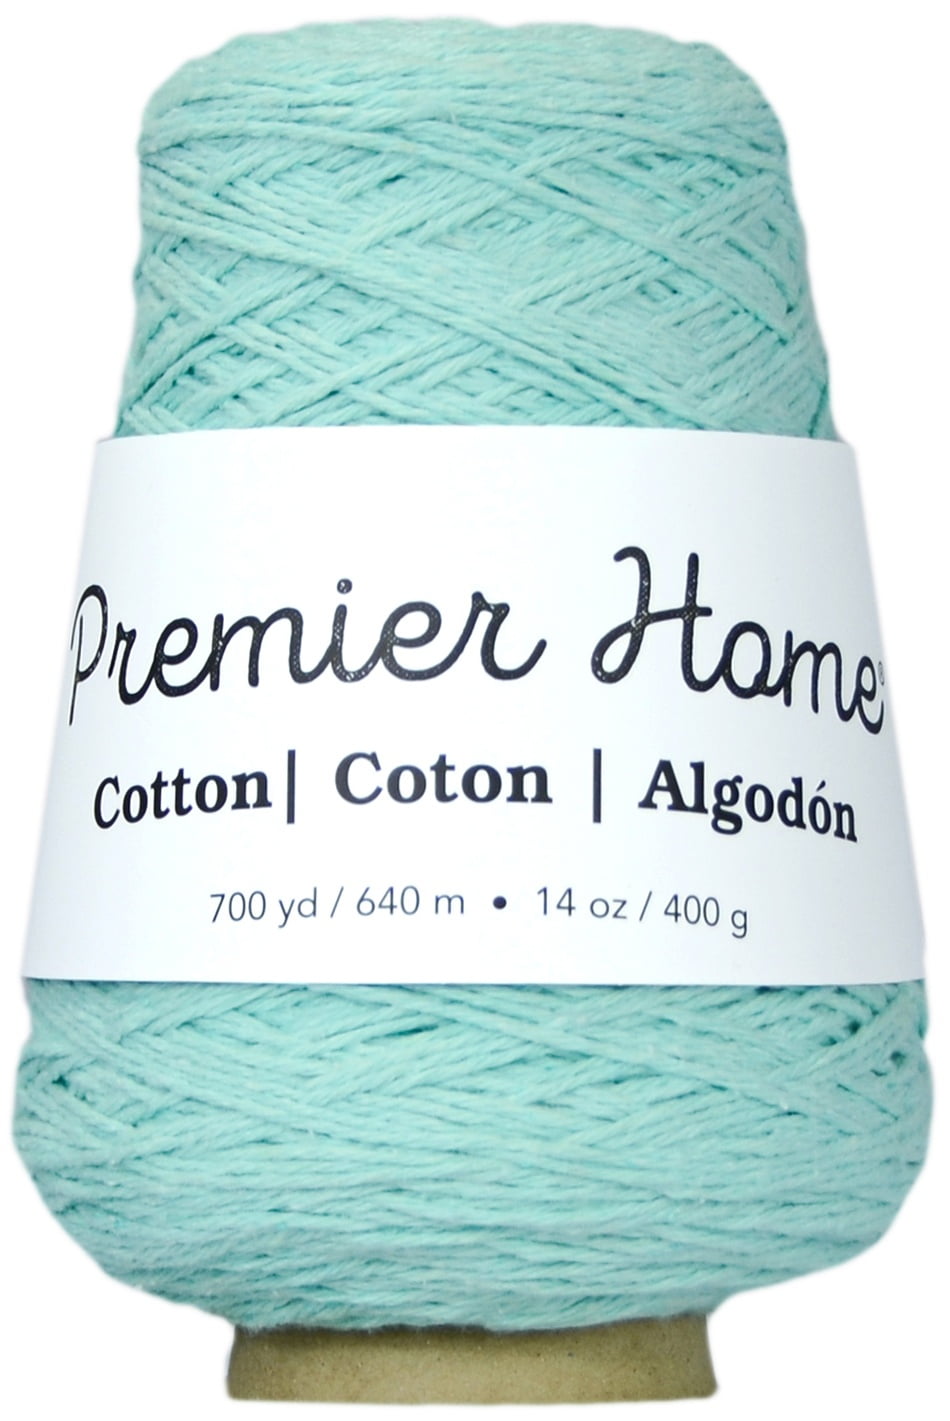 Premier Home Cotton Yarn-Pastel Blue, 1 count - Foods Co.